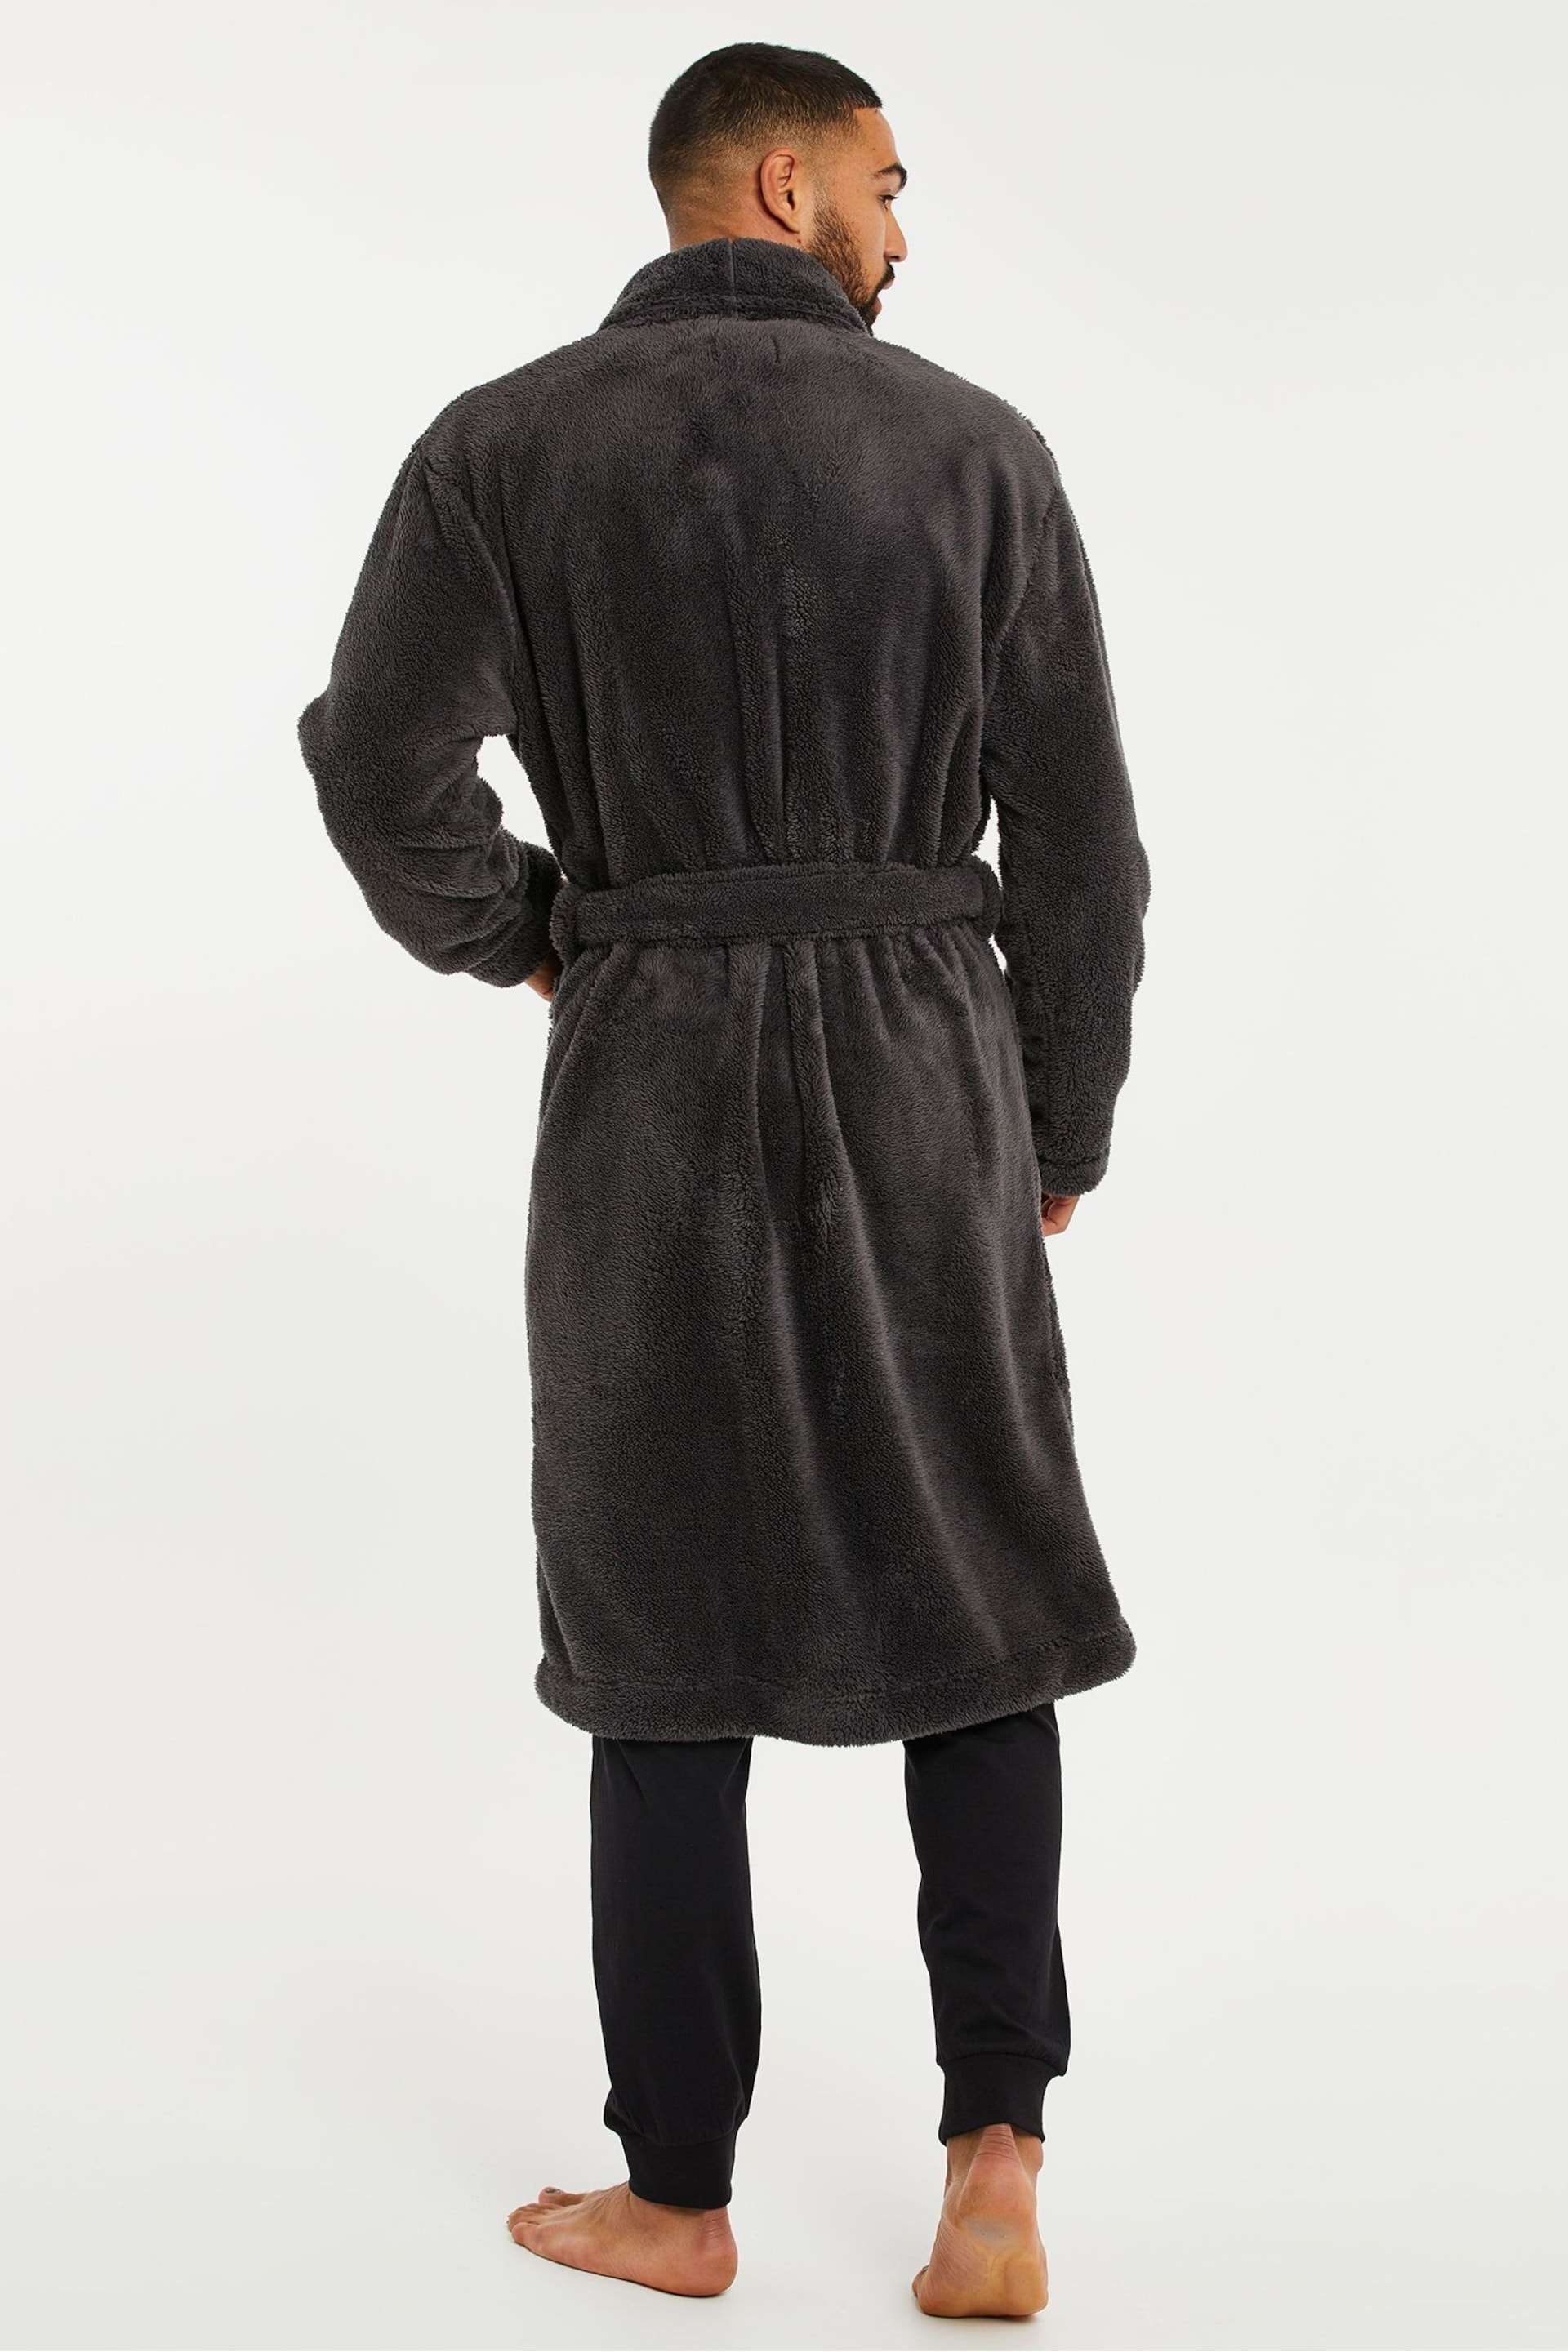 Threadbare Grey Cosy Soft Fleece Dressing Gown - Image 3 of 4